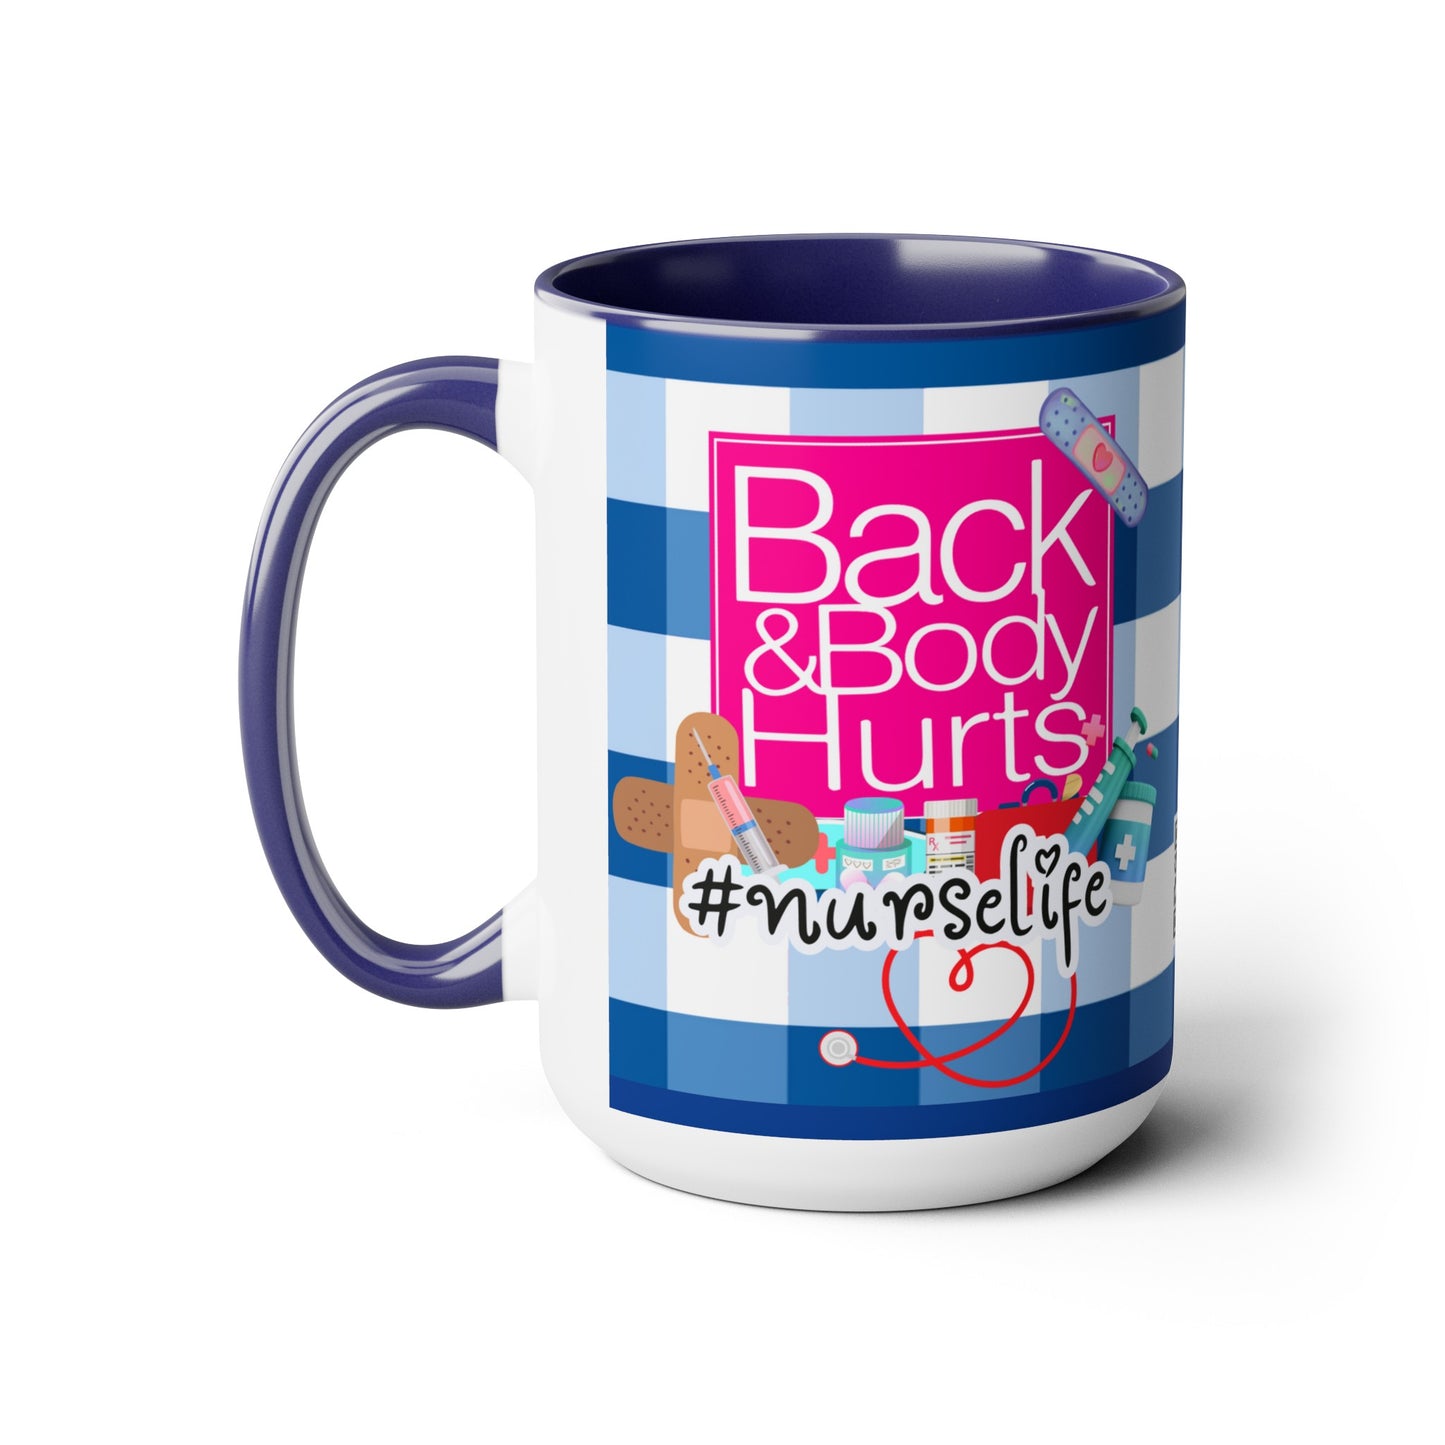 Nurse Life Back and Body Hurts Mug Sassy Coffee Meme Mugs Sarcastic Funny Coffee Mug Fashion Large Coffee Cup Teacher Adult Humor Nurse Gift